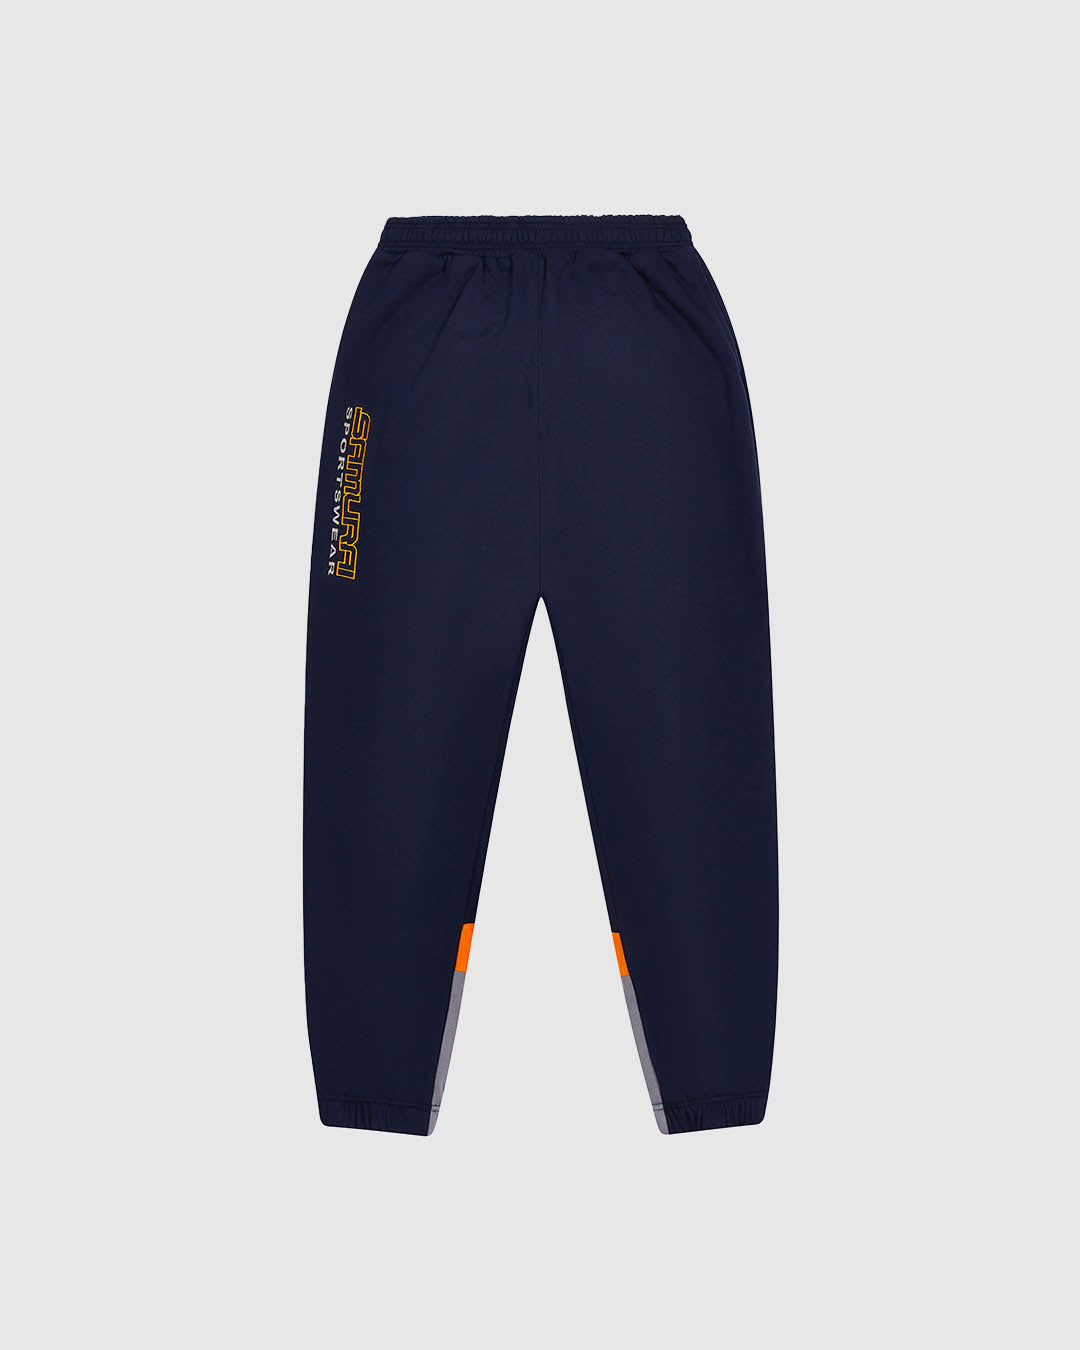 AC: 1-009 - Men's Toronto Sweatpants - Navy